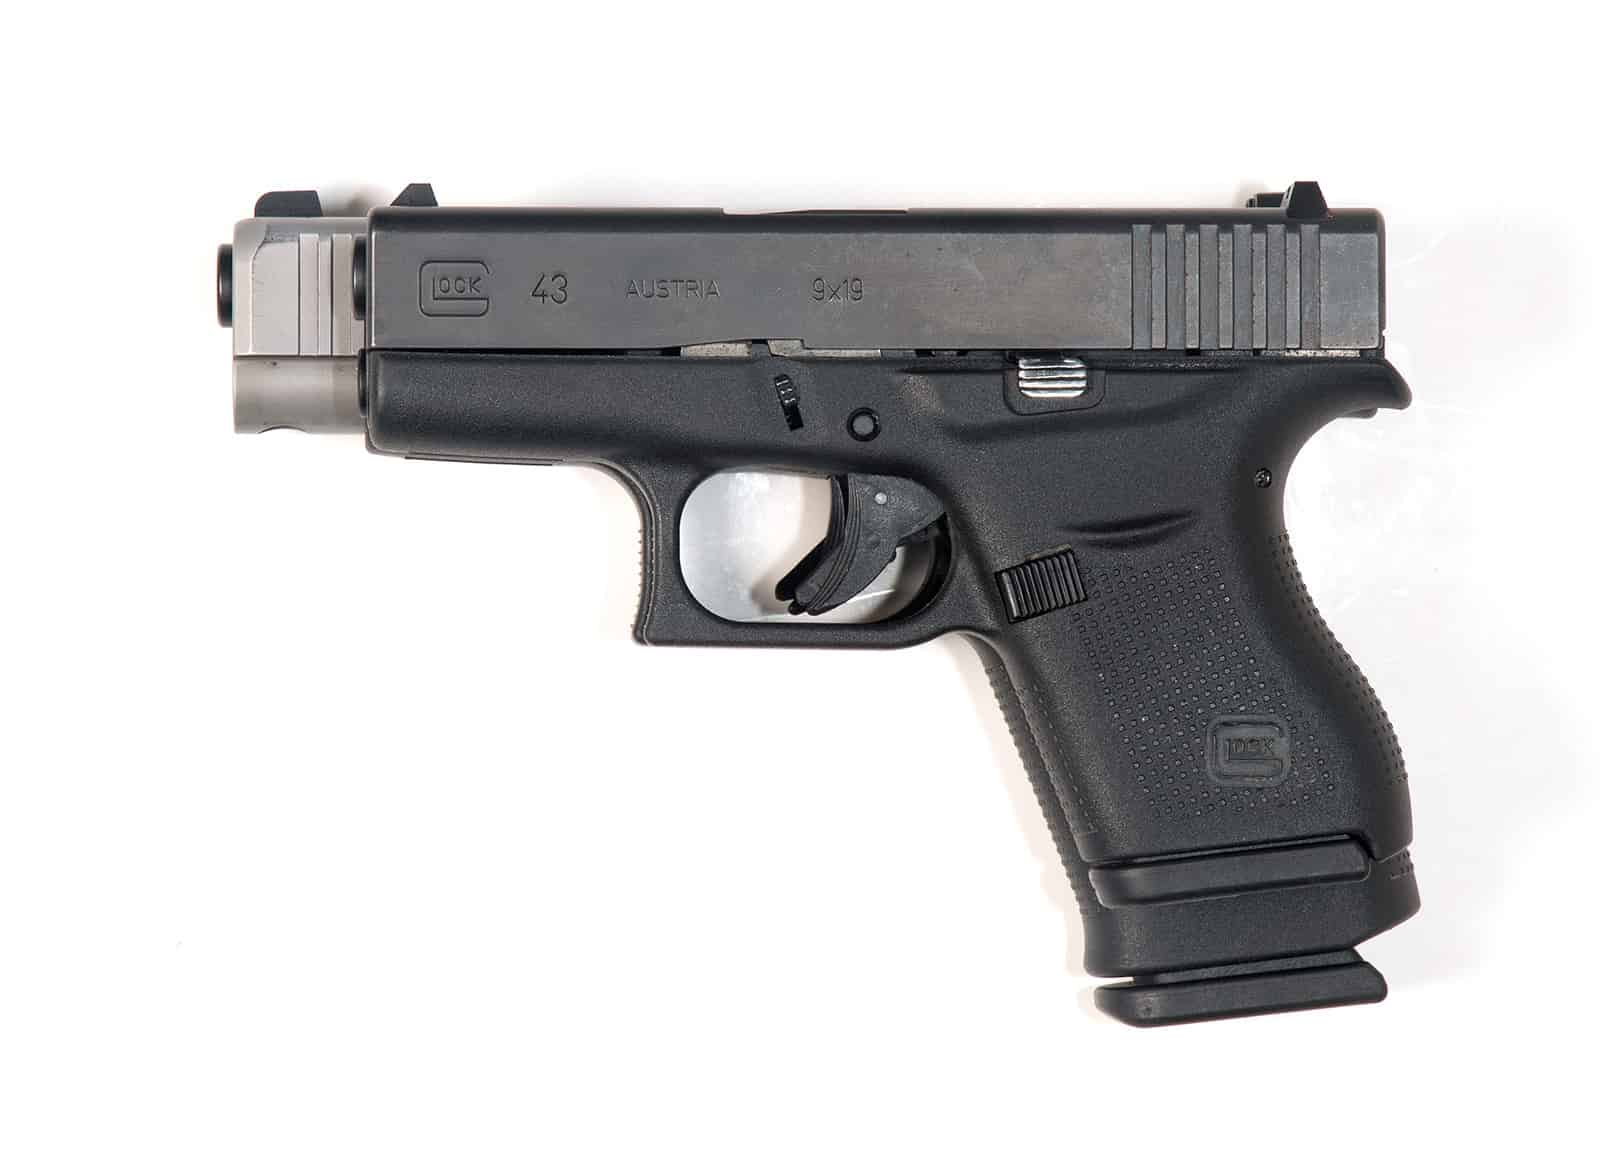 Glock 43: A single stack 9mm pistol at last